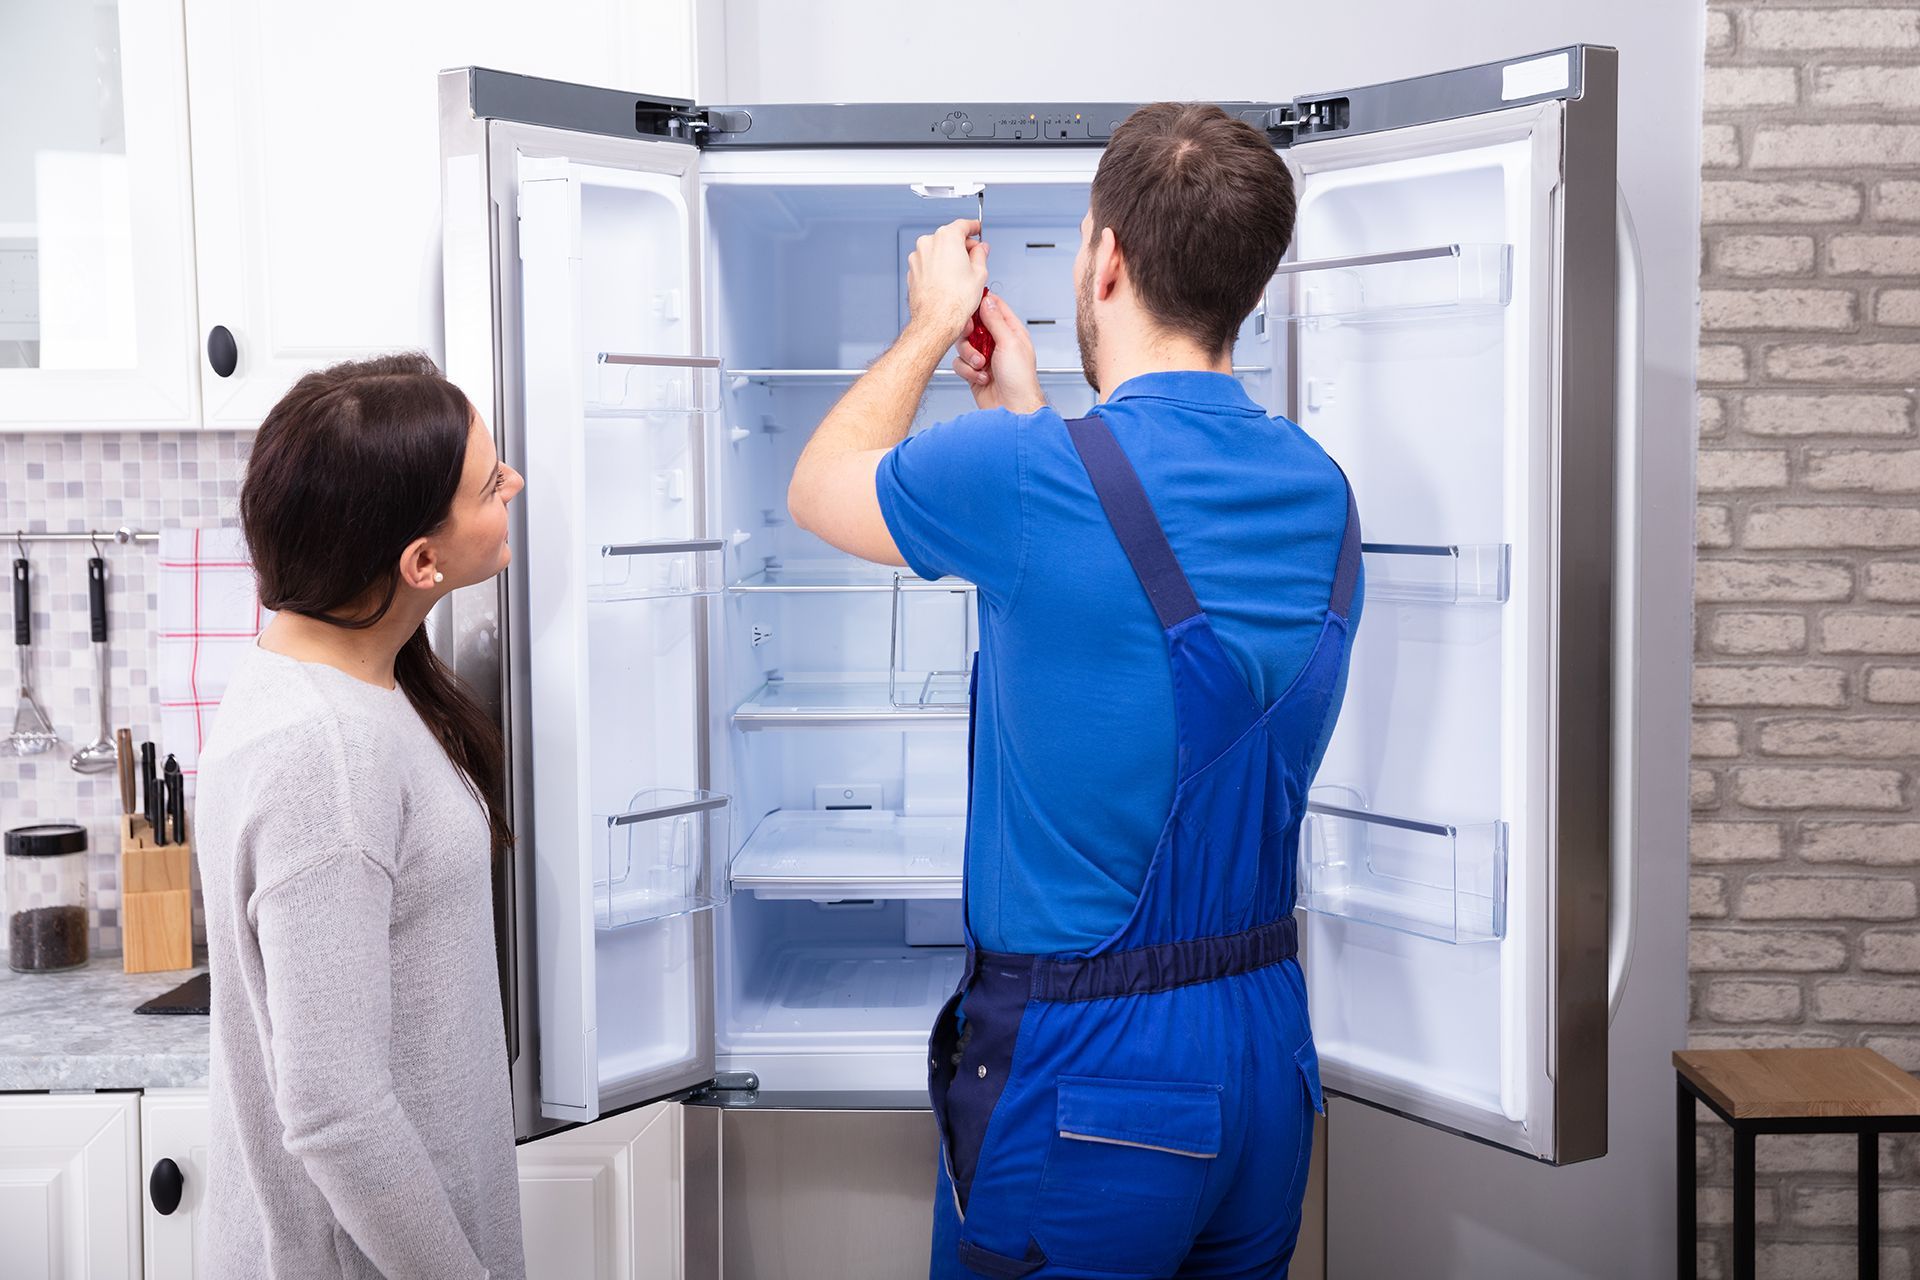 Repair Man Repairing Refrigerator With Client